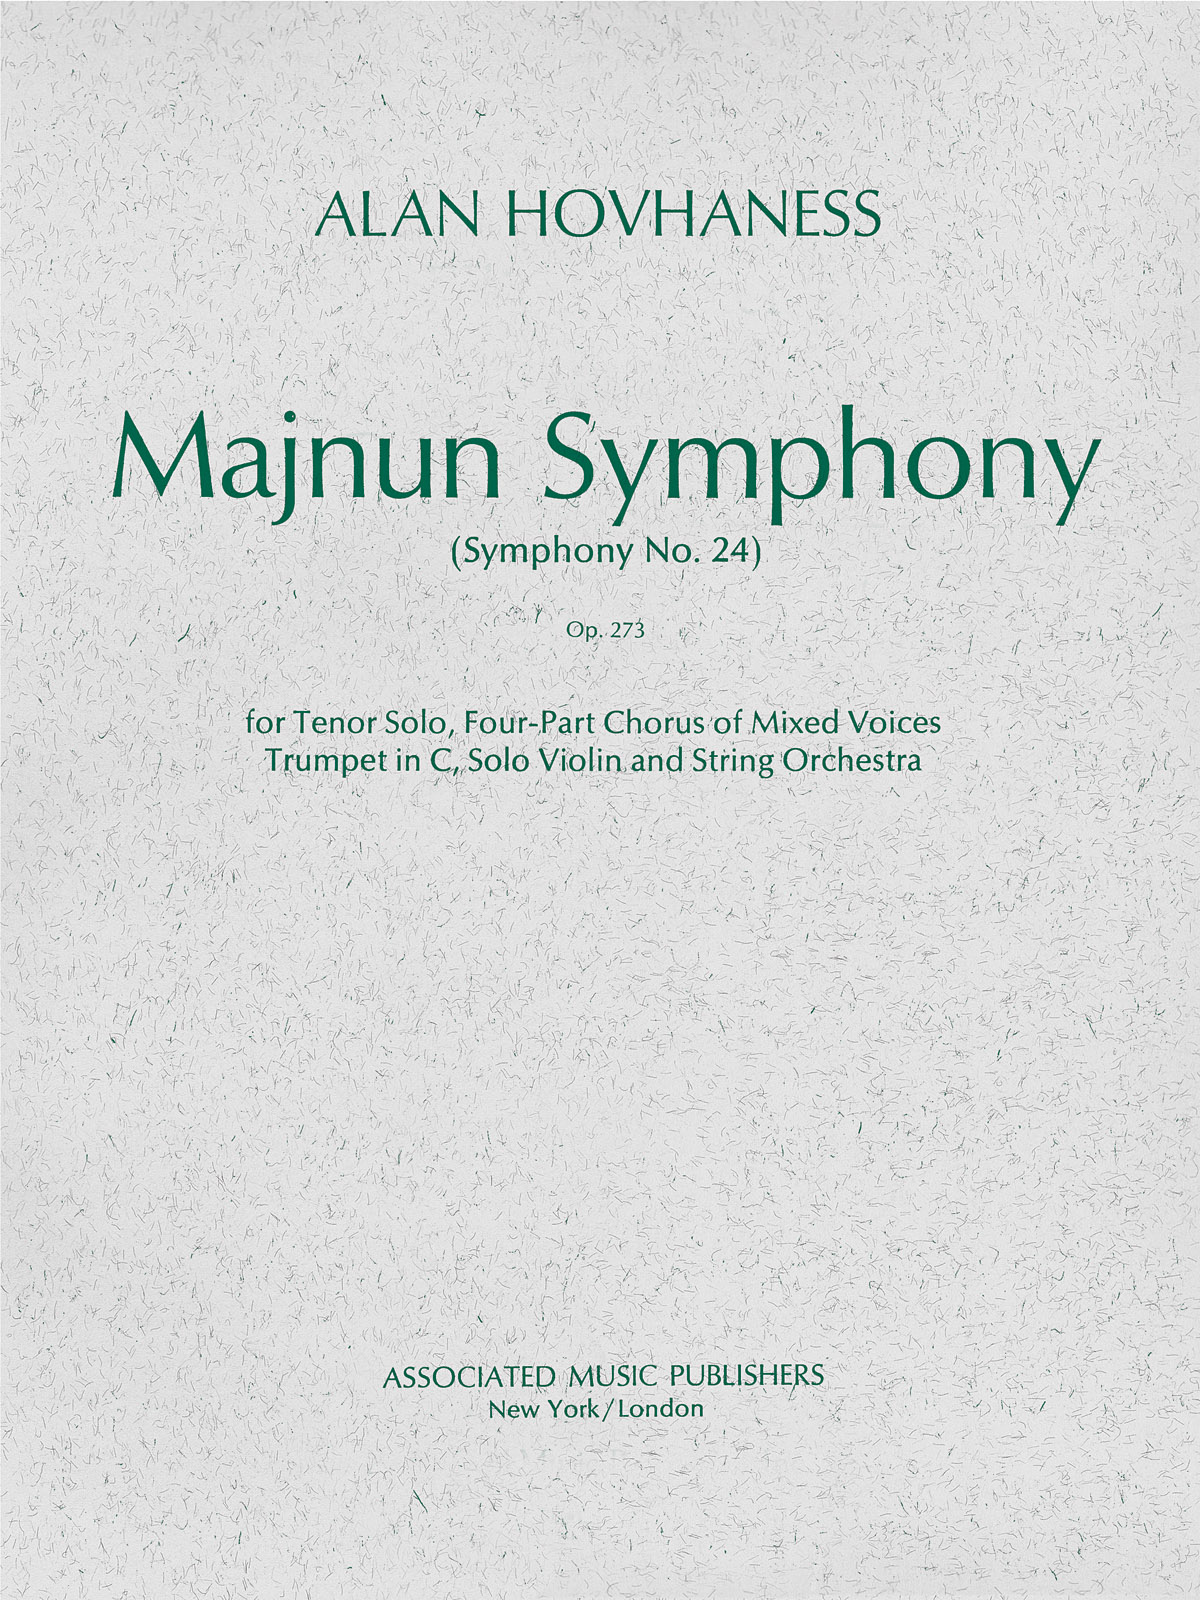 Alan Hovhaness: Majnun Symphony